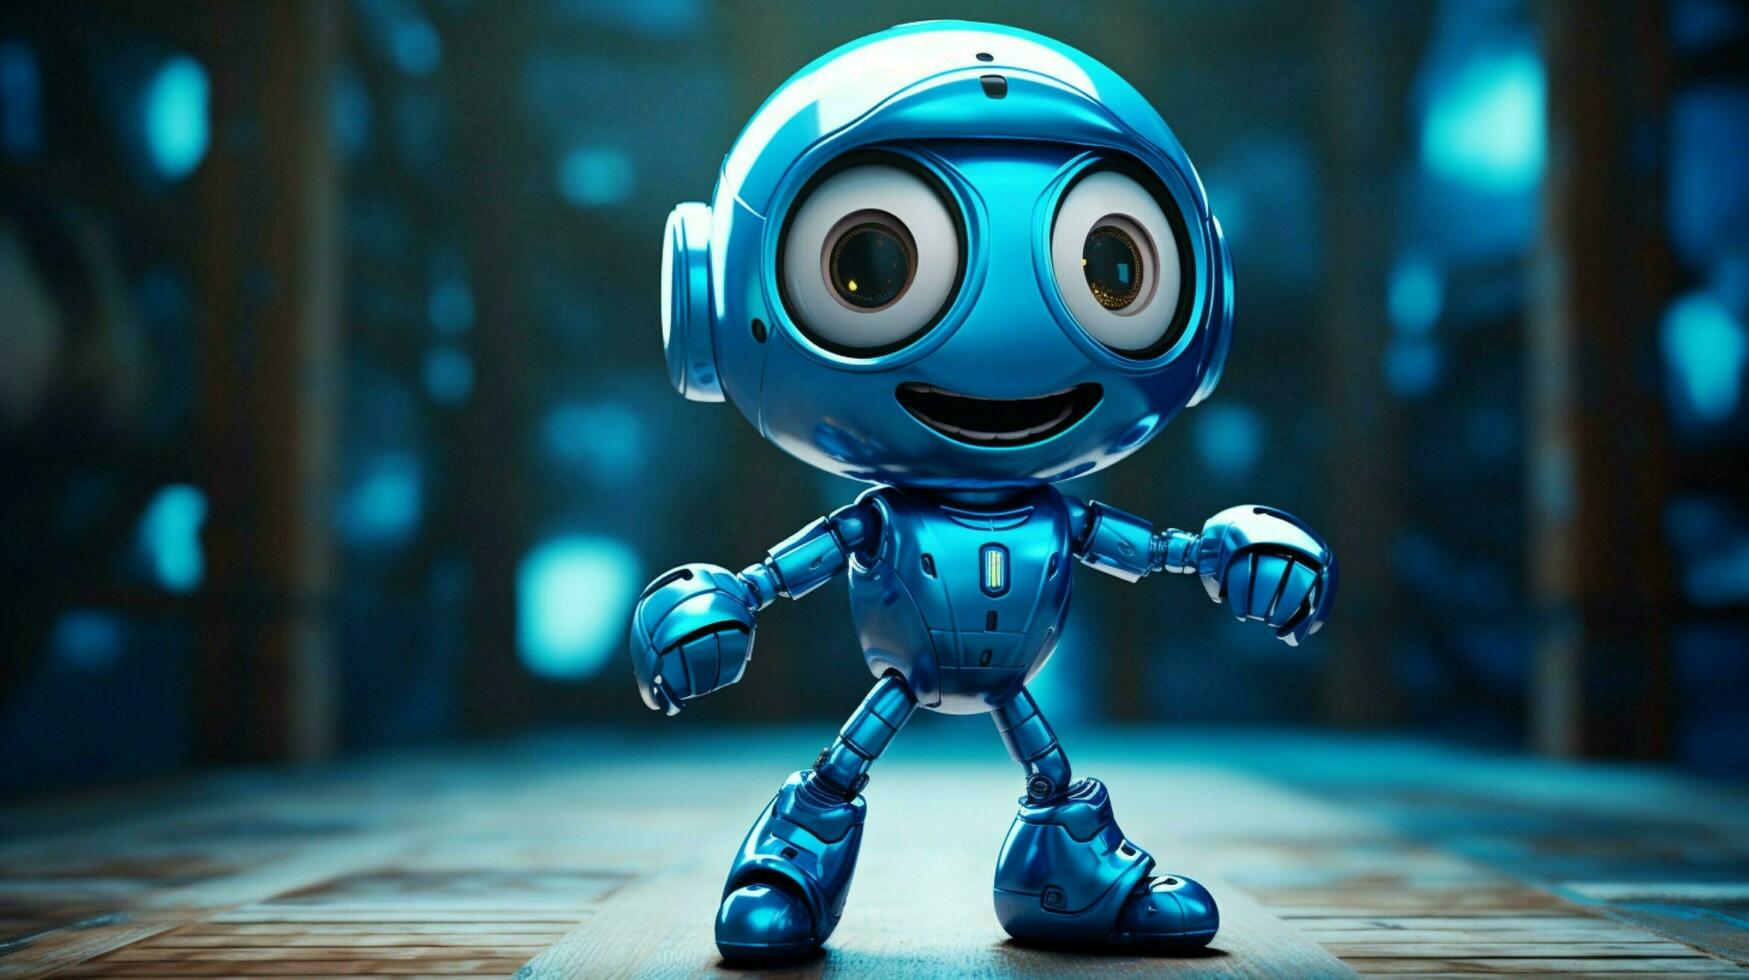 blue cyborg toy dances with futuristic joy photo